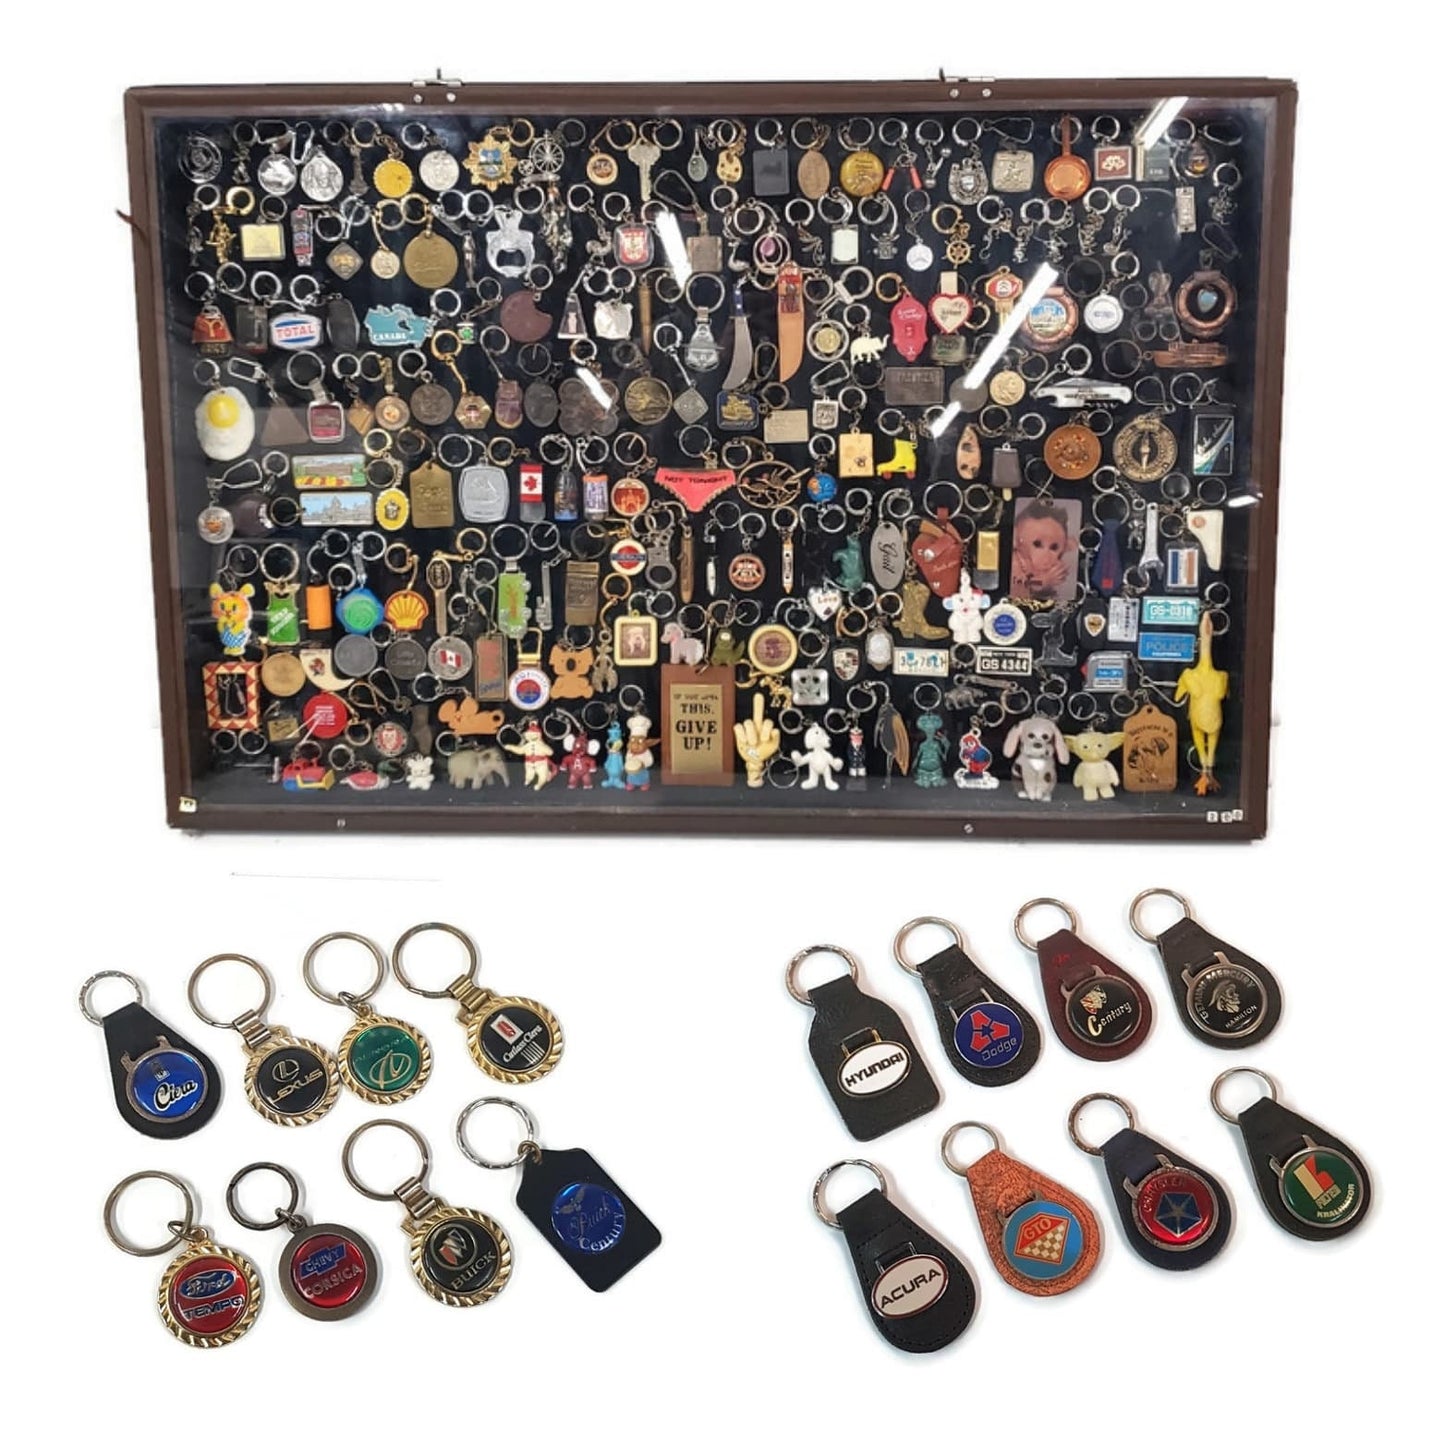 his key chain keychain key fob keytag vintage automotove keychain gift collectible